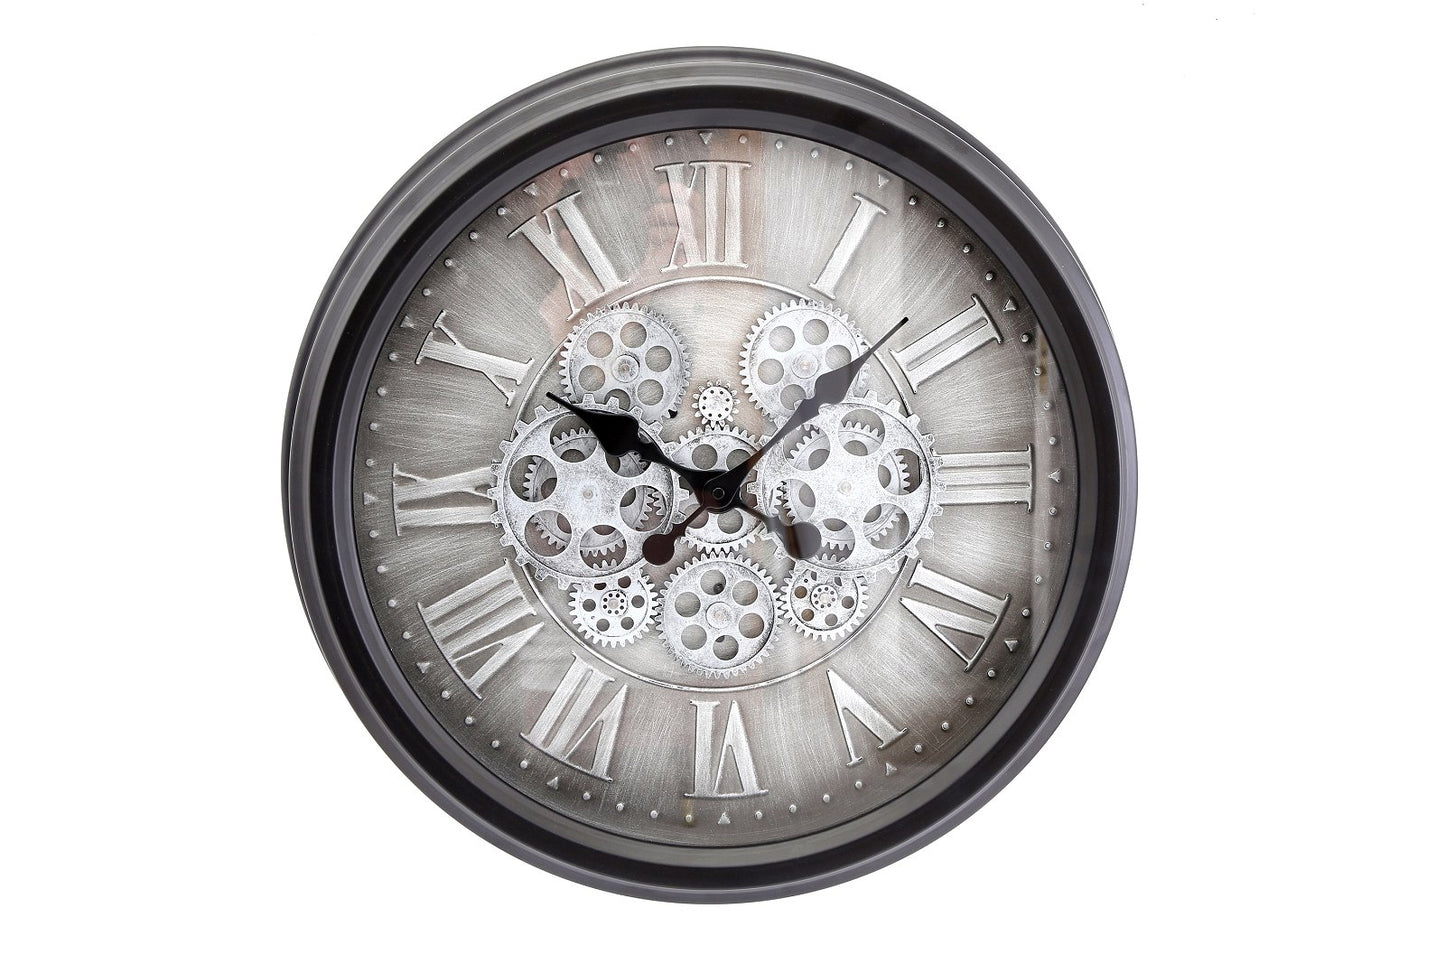 5024418259022 Geko Moving Gear Wall Clock with Roman Numerals 52.5cm brambles cookshop 97